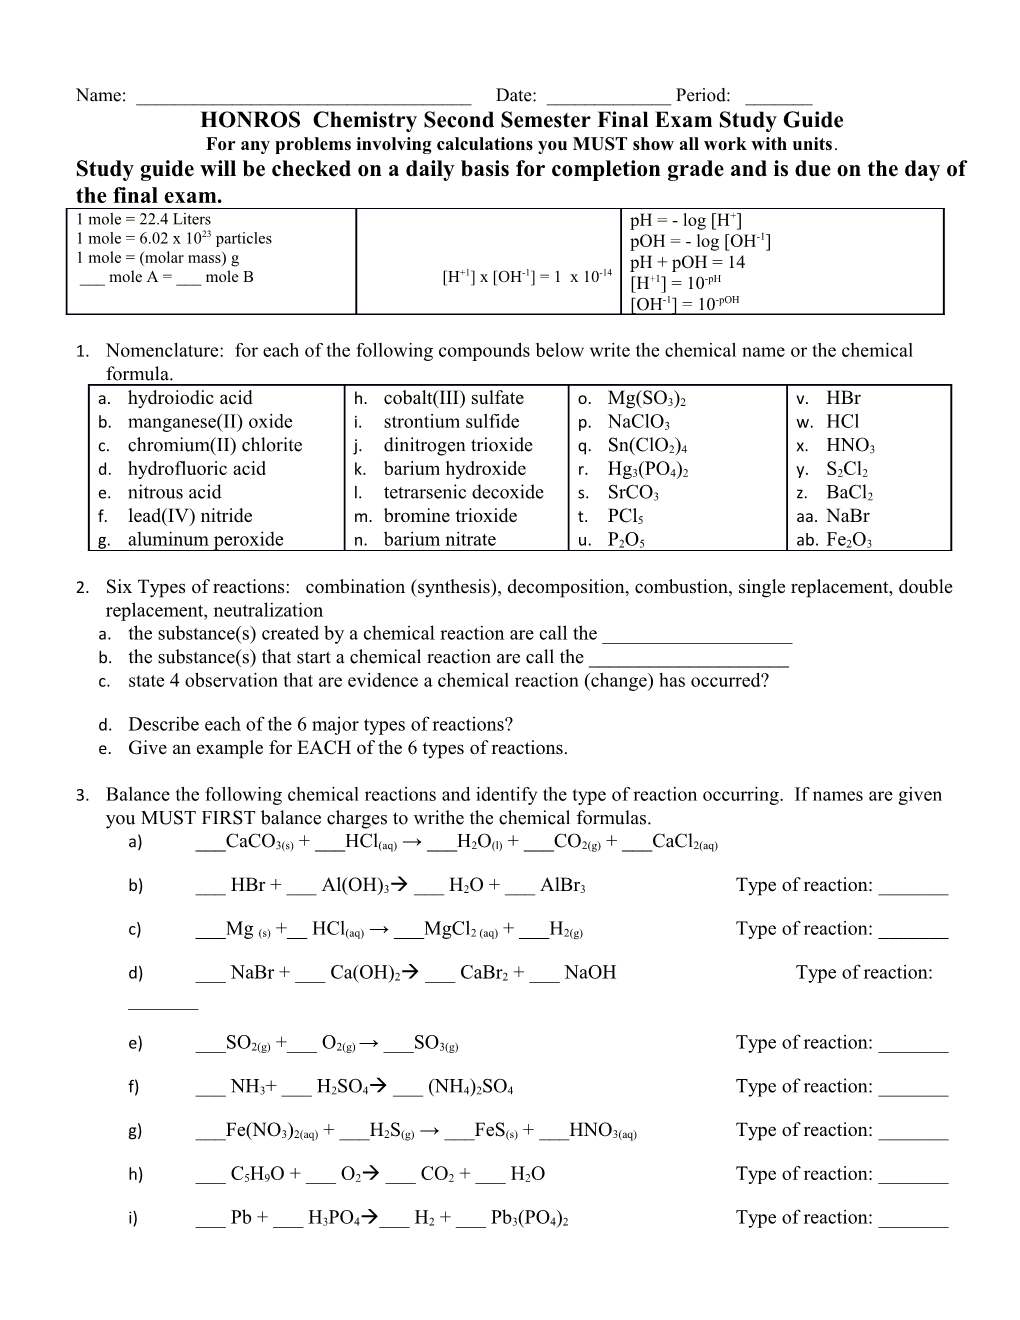 HONROS Chemistry Second Semester Final Exam Study Guide